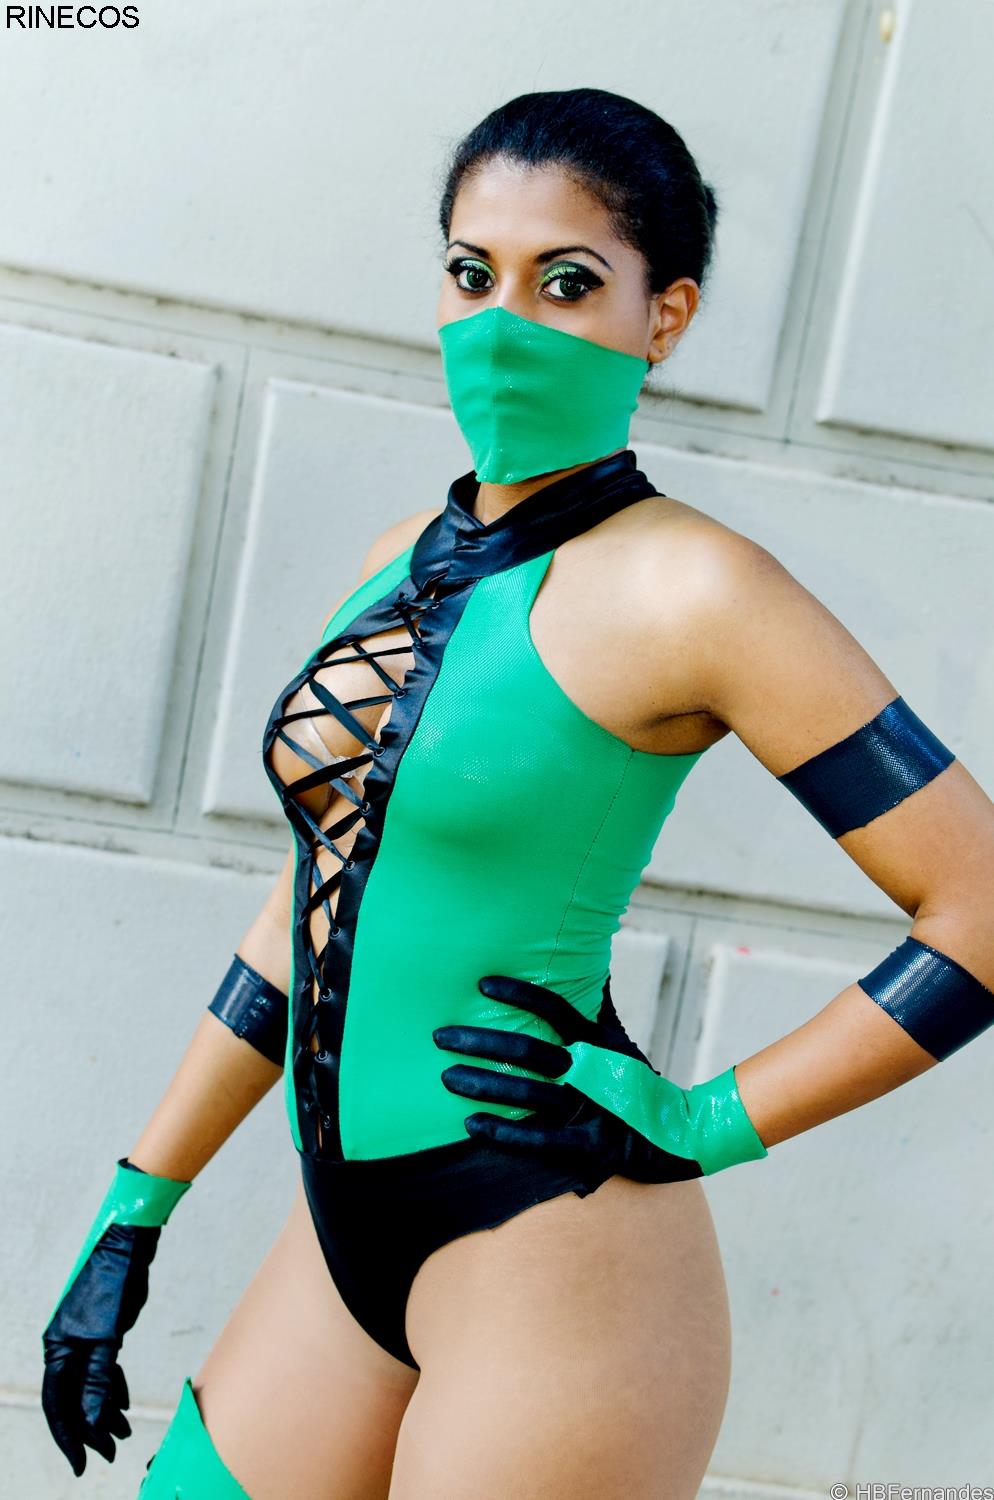 Rinecos as Jade cosplay